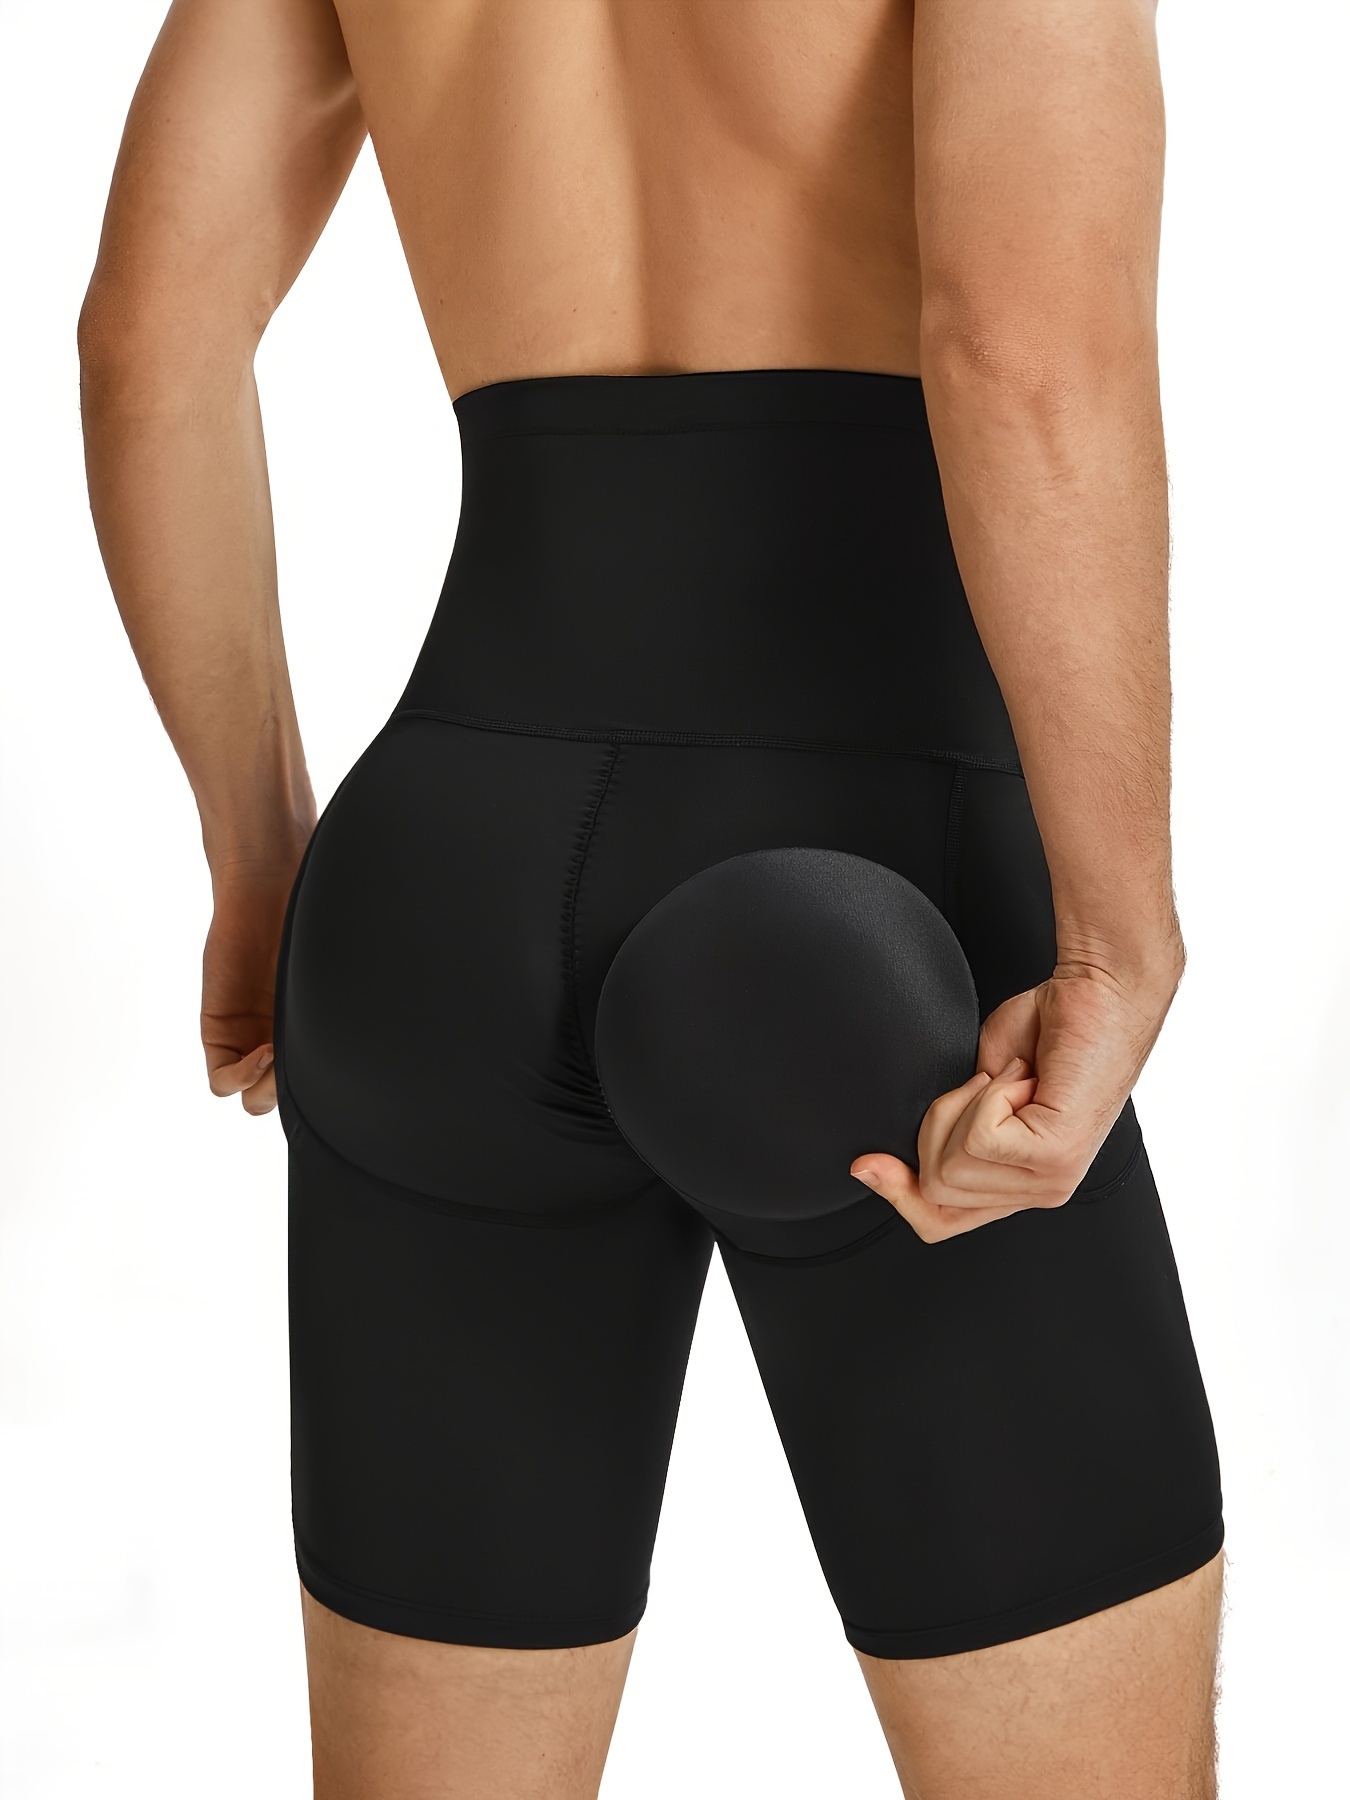 Men Underwear Waist Slimming Trainer Corset Underpants High Waist Shaper  for Men Body Shapewear, White, L 